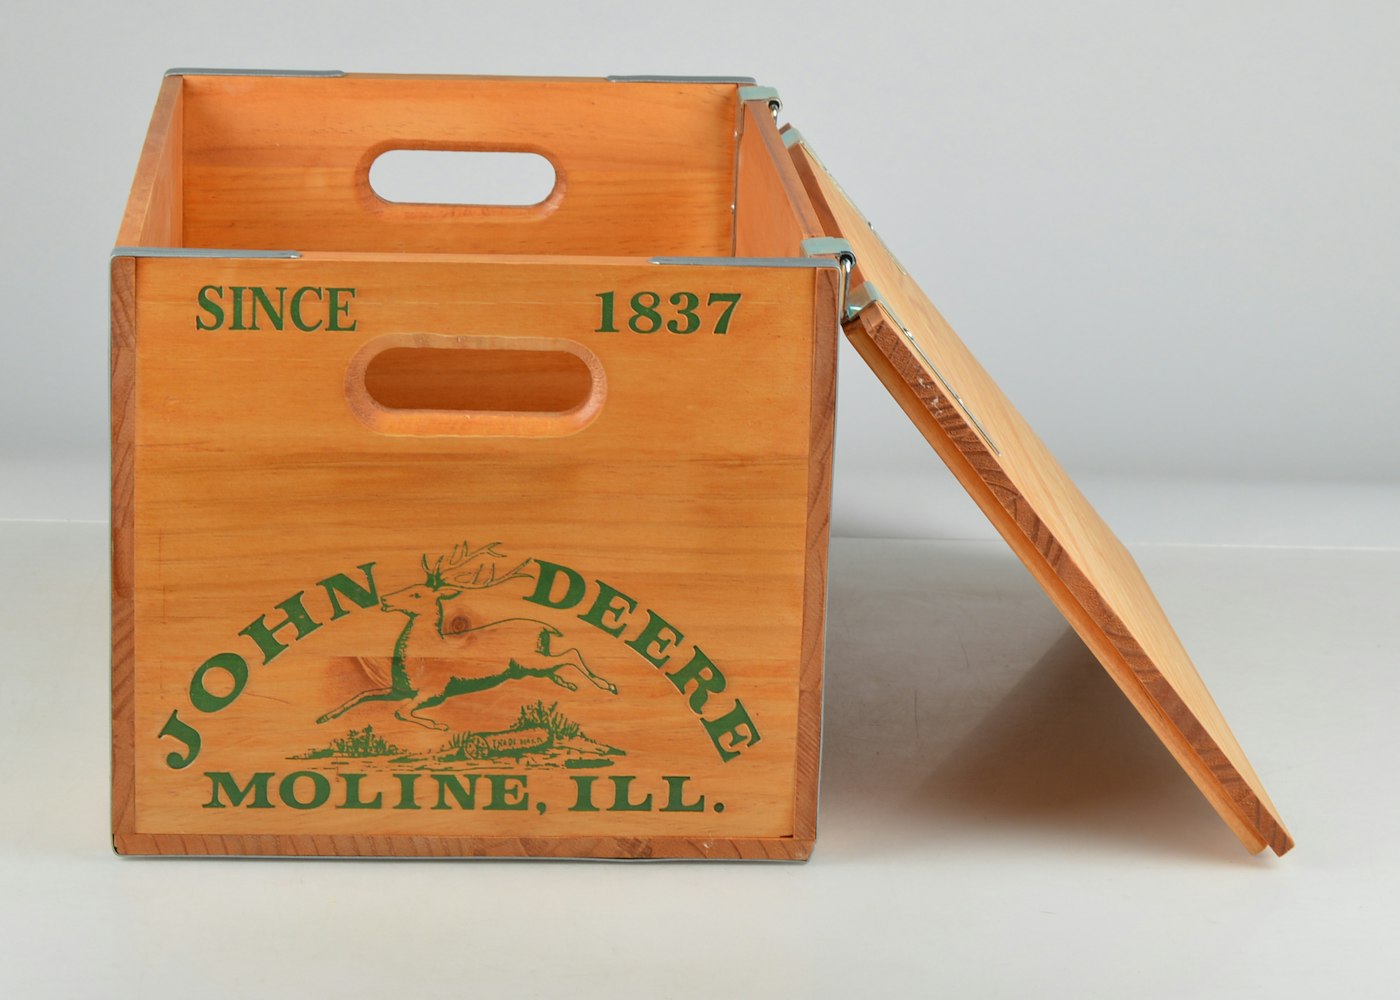 John Deere Wooden Checkers Box Ebth